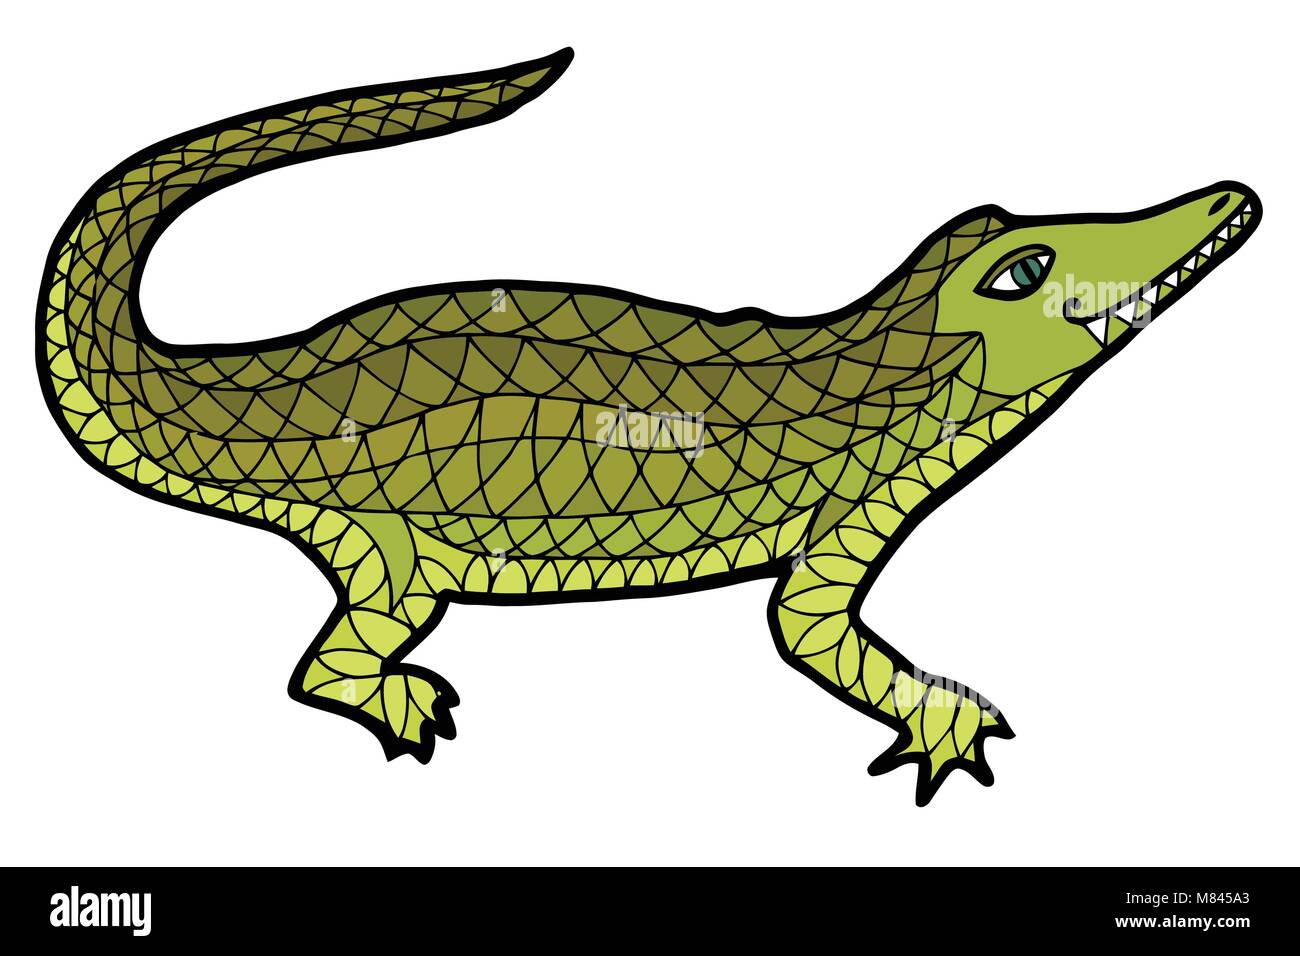 Crocodile illustrazione vettoriale. Alligatore groviglio zen, zen doodle, zenart, libro da colorare, tatoo Illustrazione Vettoriale